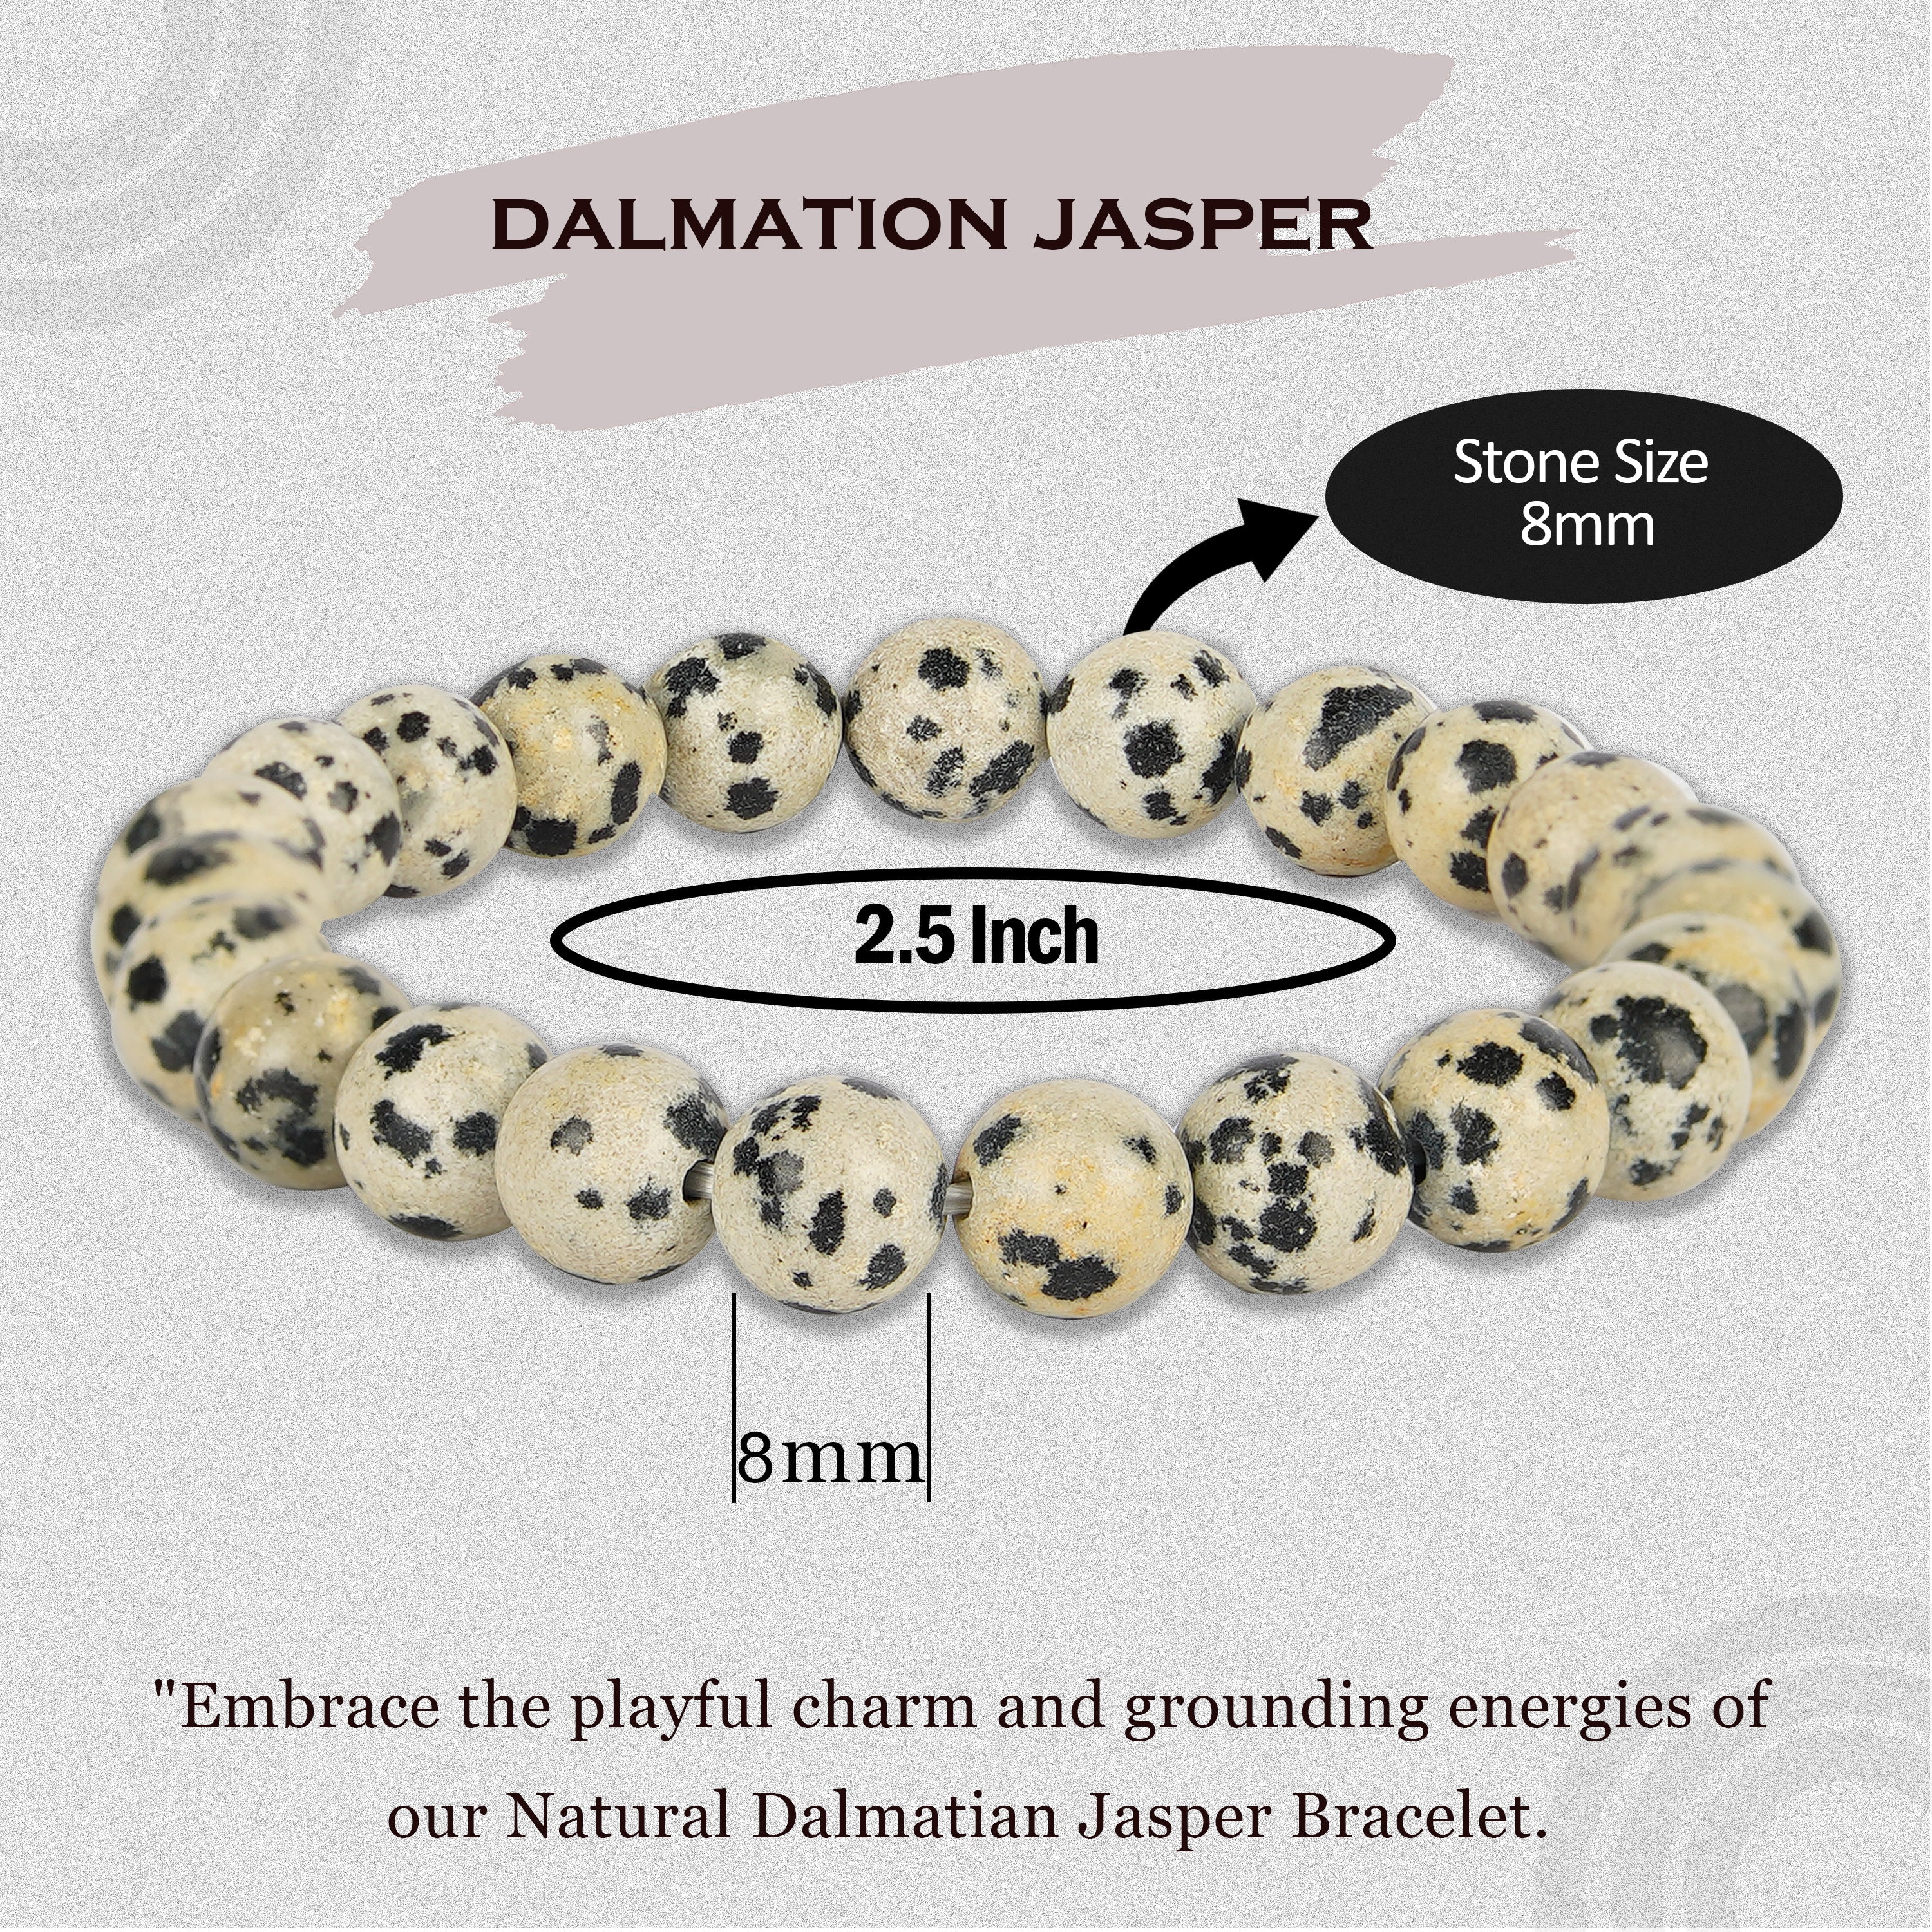 Dalmatian Jasper Bracelet